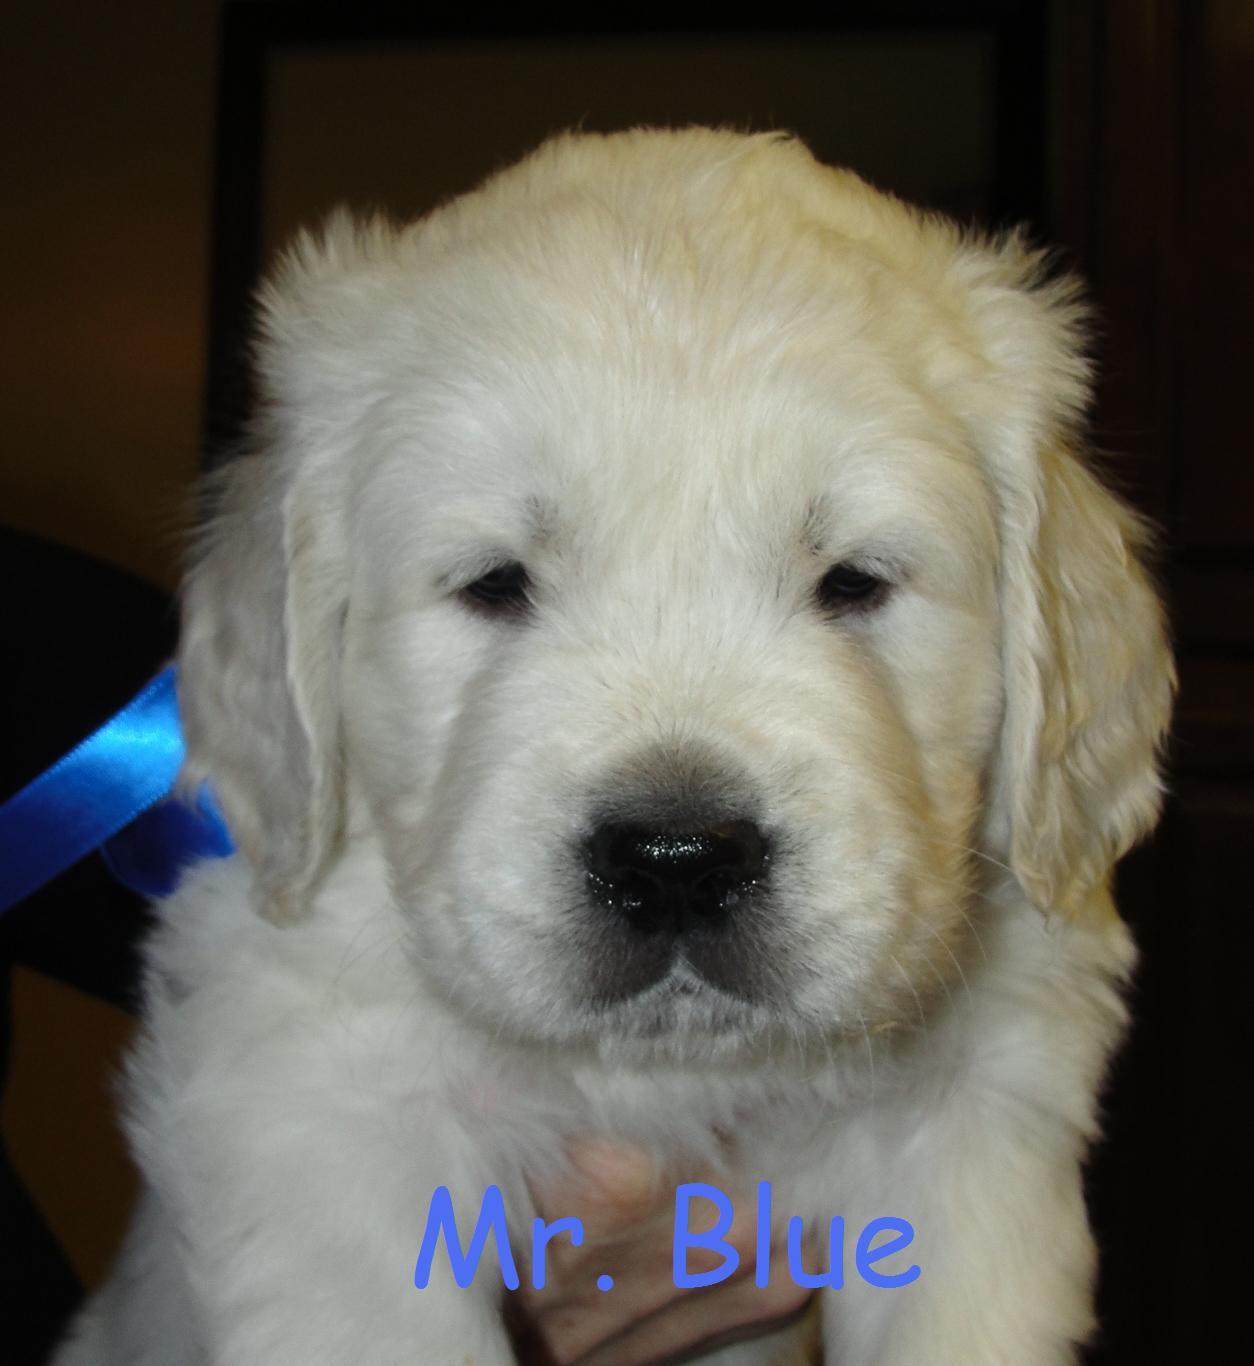 Mr. Blue